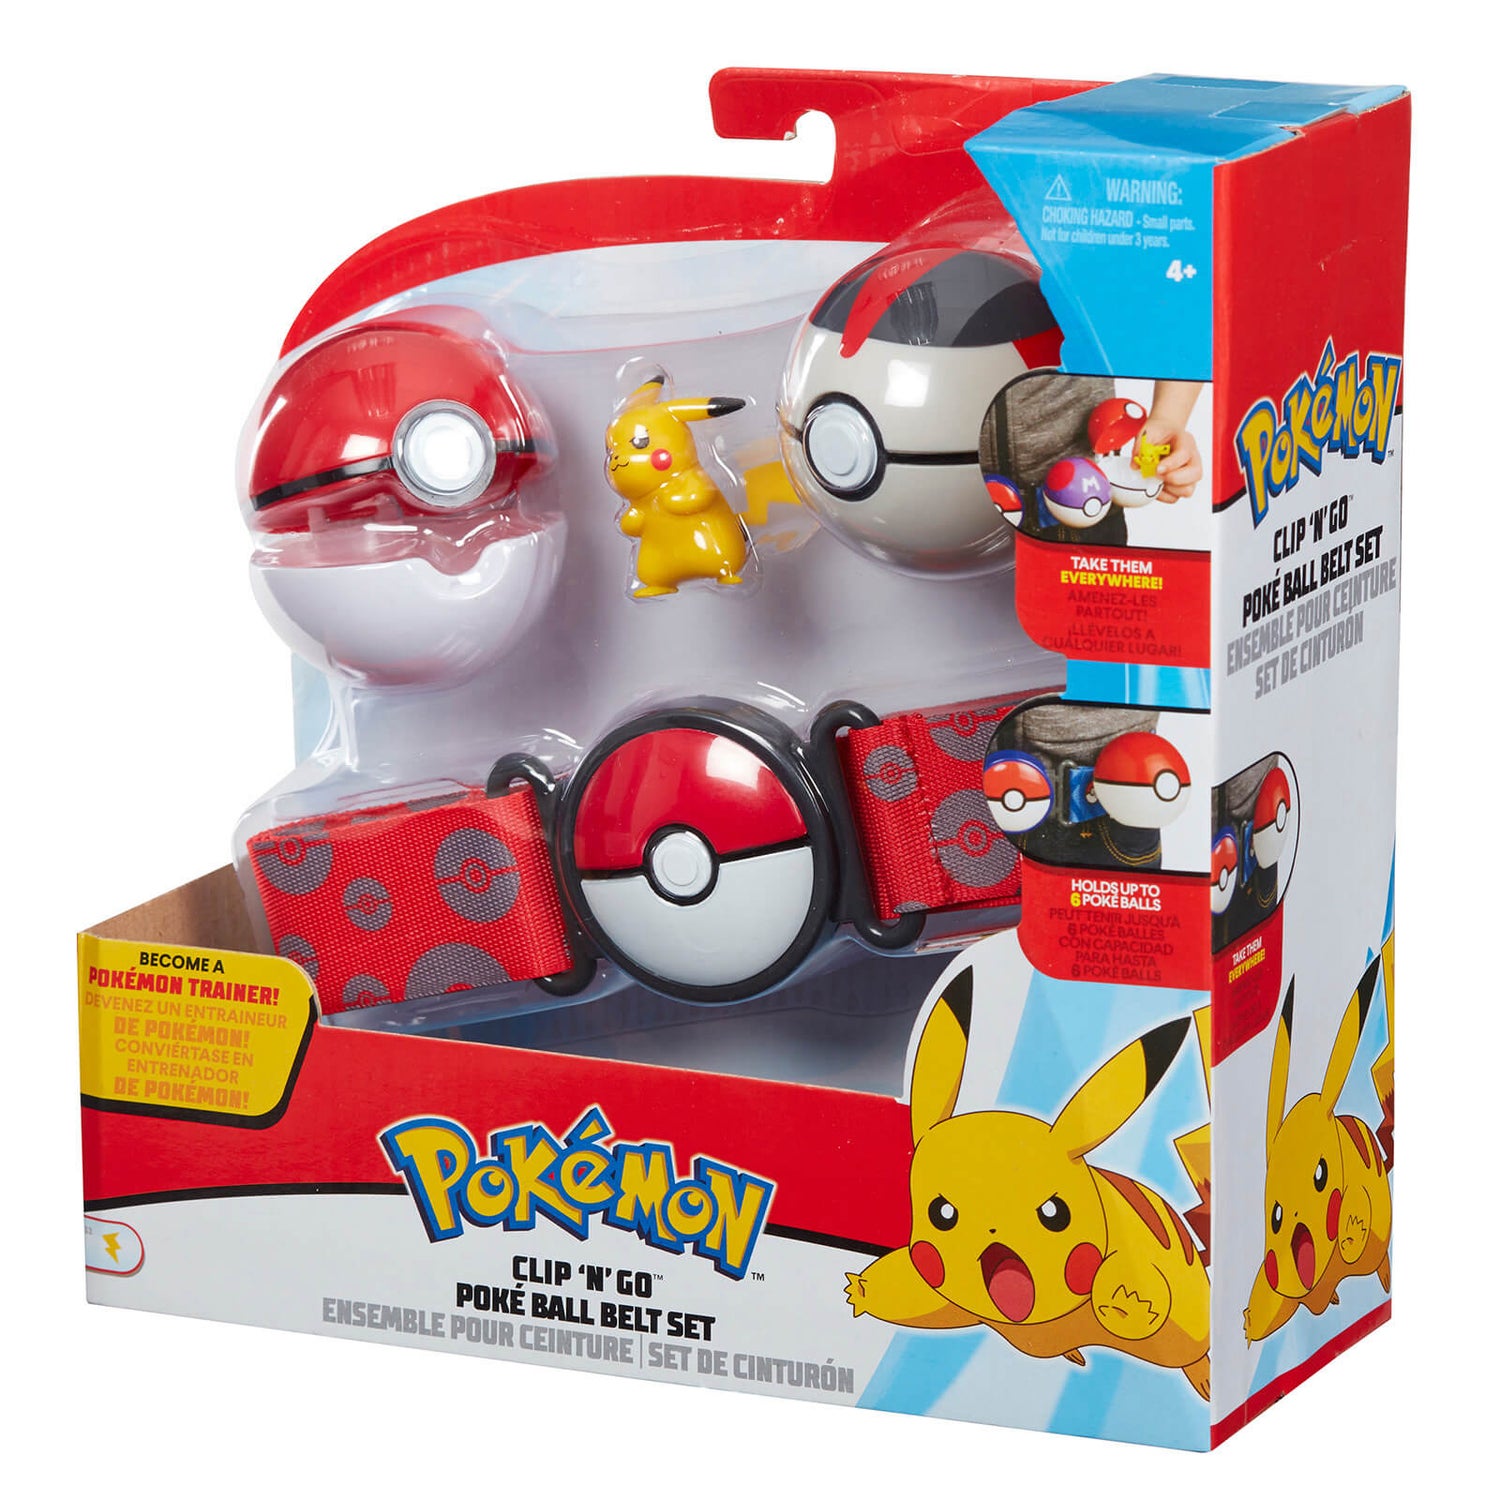 Pokémon Clip 'N' Go Pikachu Poke Ball Riemenset